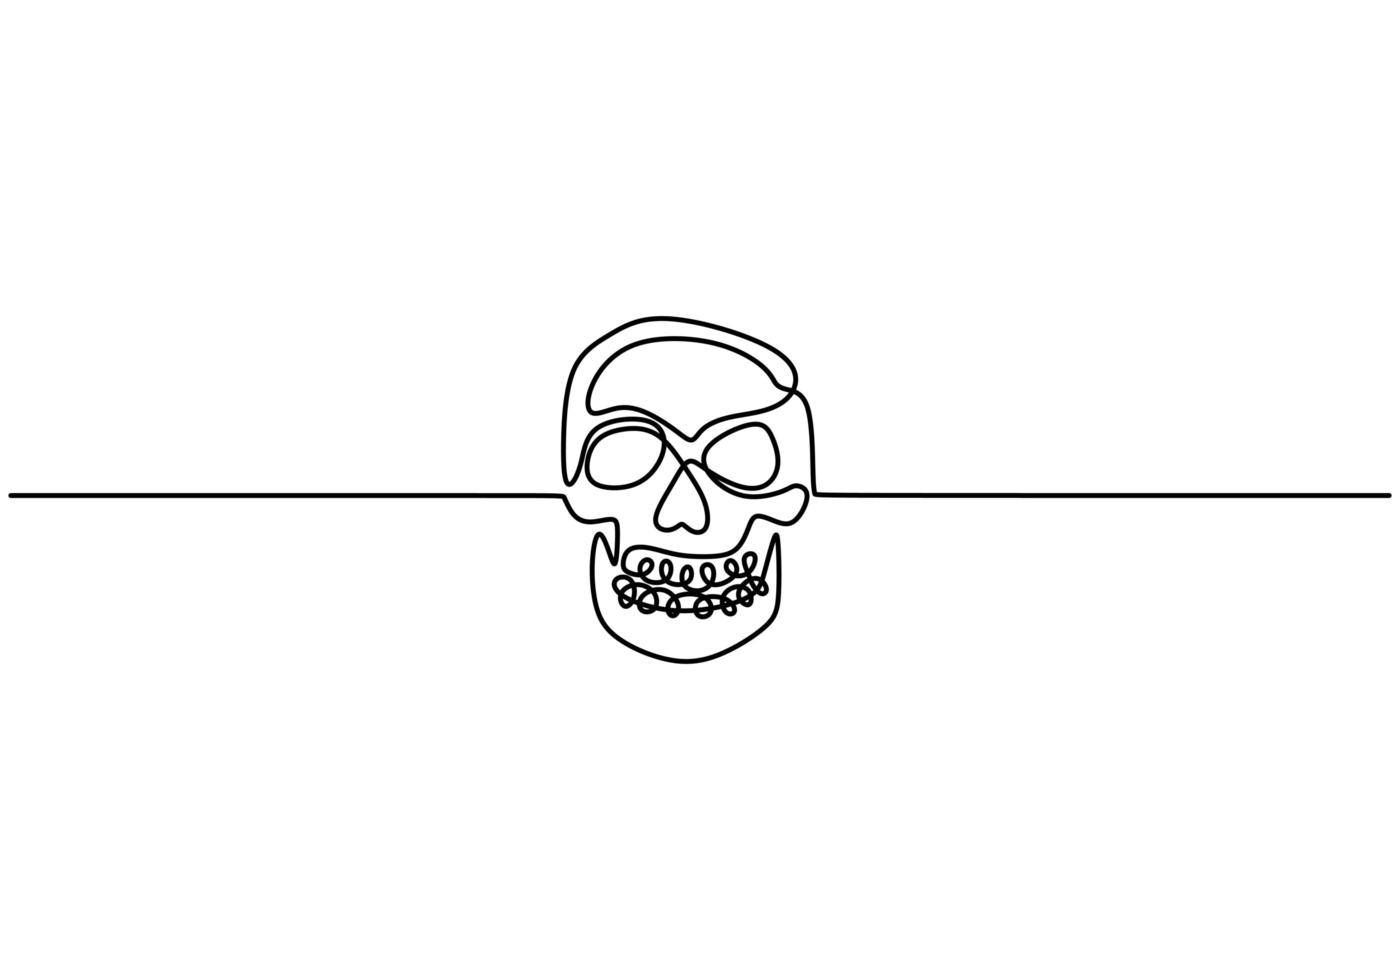 kontur ritning kontinuerlig en linje med mänsklig skalle. vektor